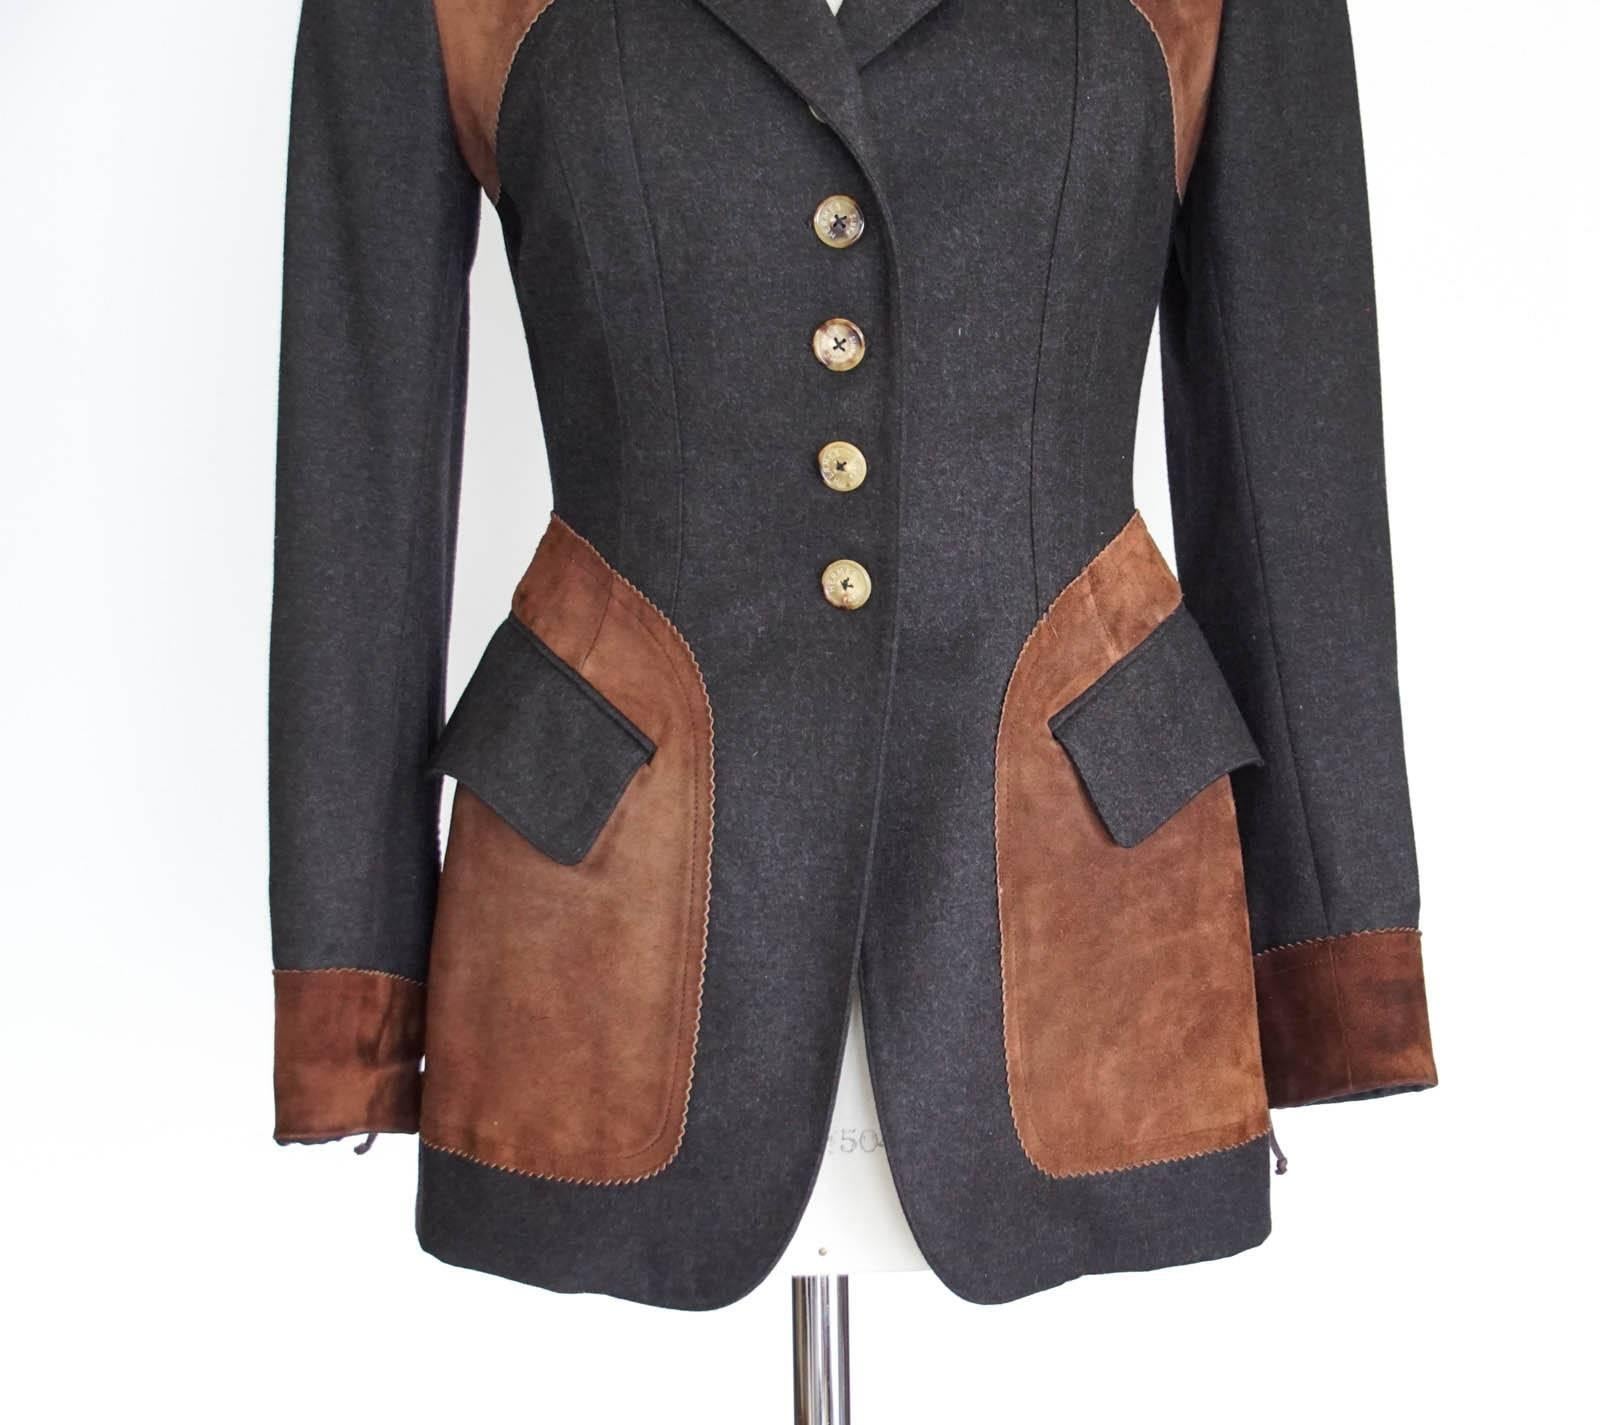 Women's Hermes Jacket Striking Shape and Details in Wool and Suede Vintage  38 / 6